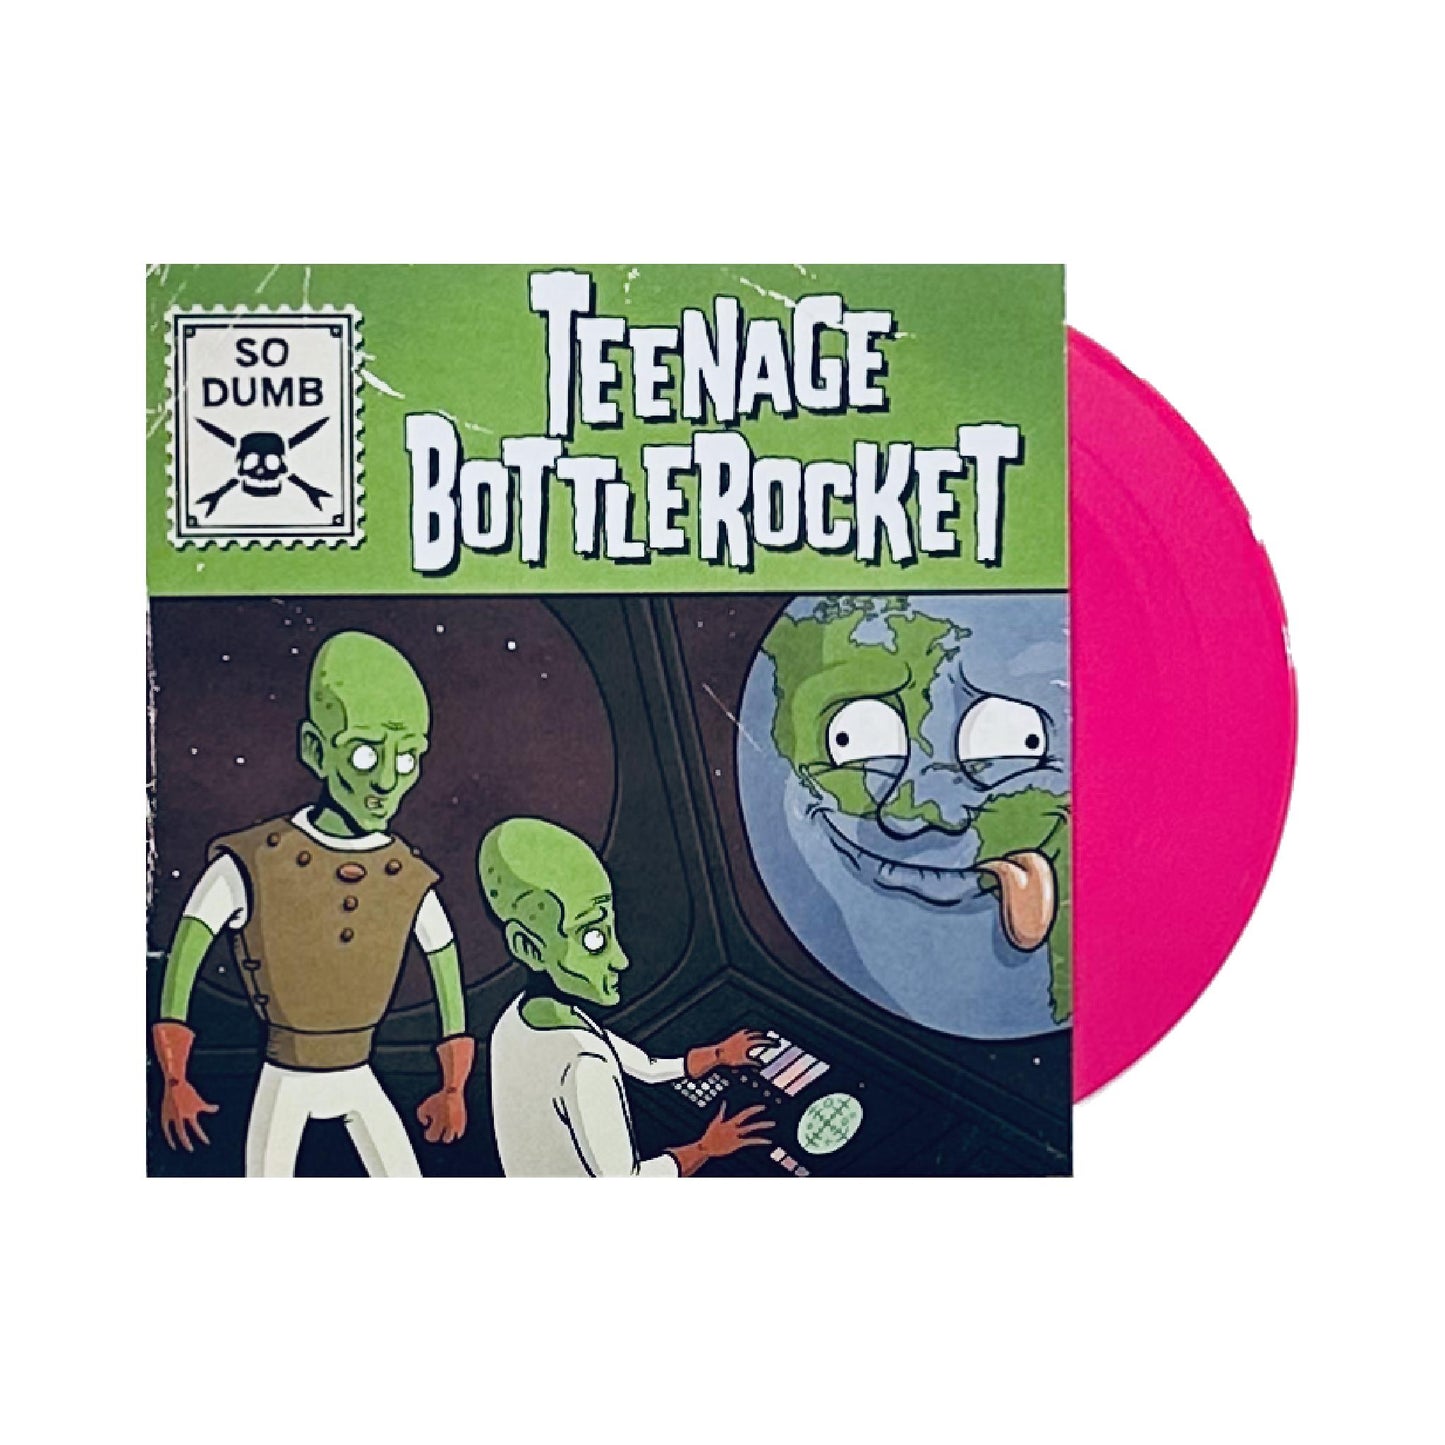 Teenage Bottlerocket - So Dumb 7" EP (color vinyl)